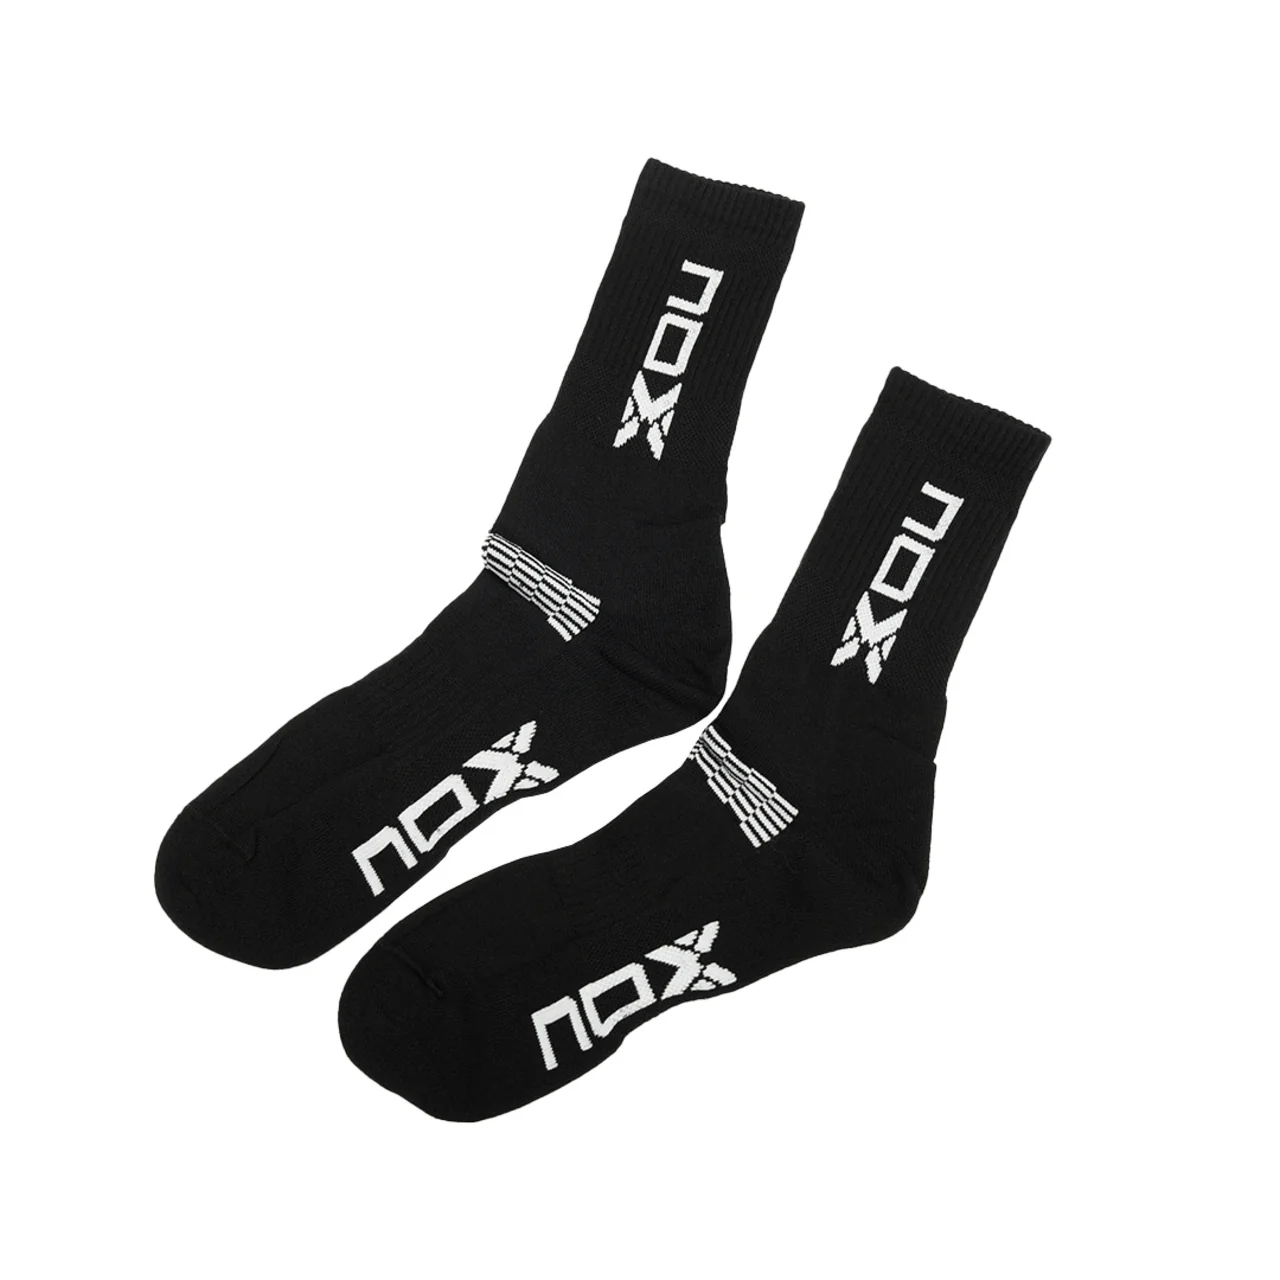 Nox Technical Socks 1pk Black/White